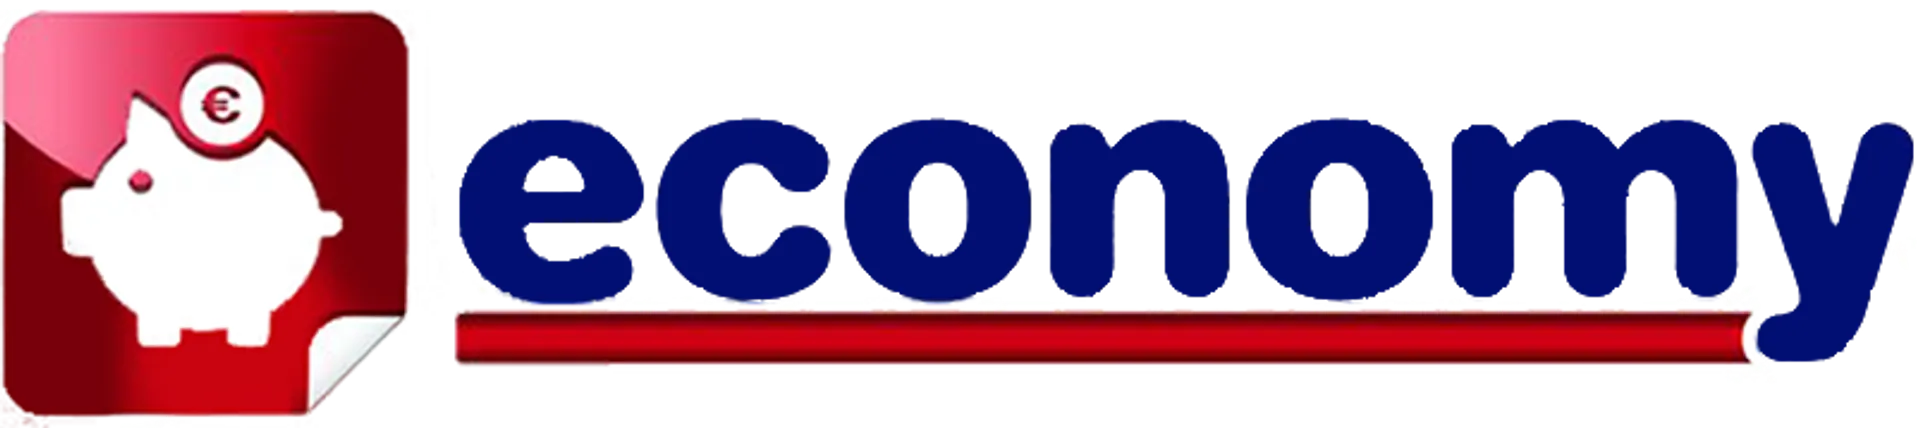 ECONOMY MARKET logo